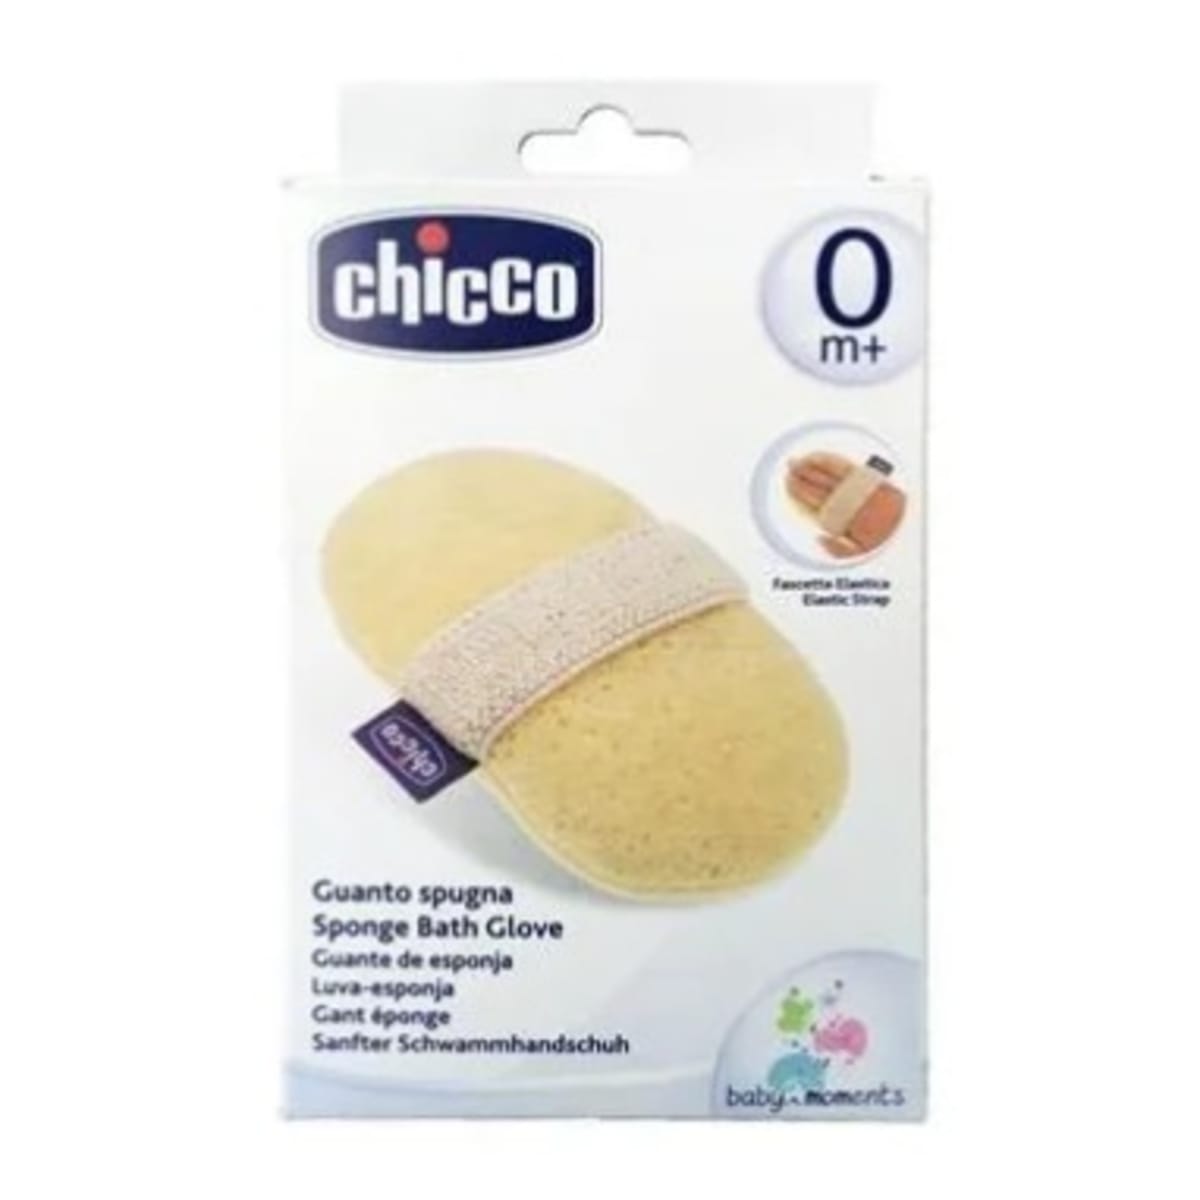 Chicco Baby Moments Bath Sponge 0m+